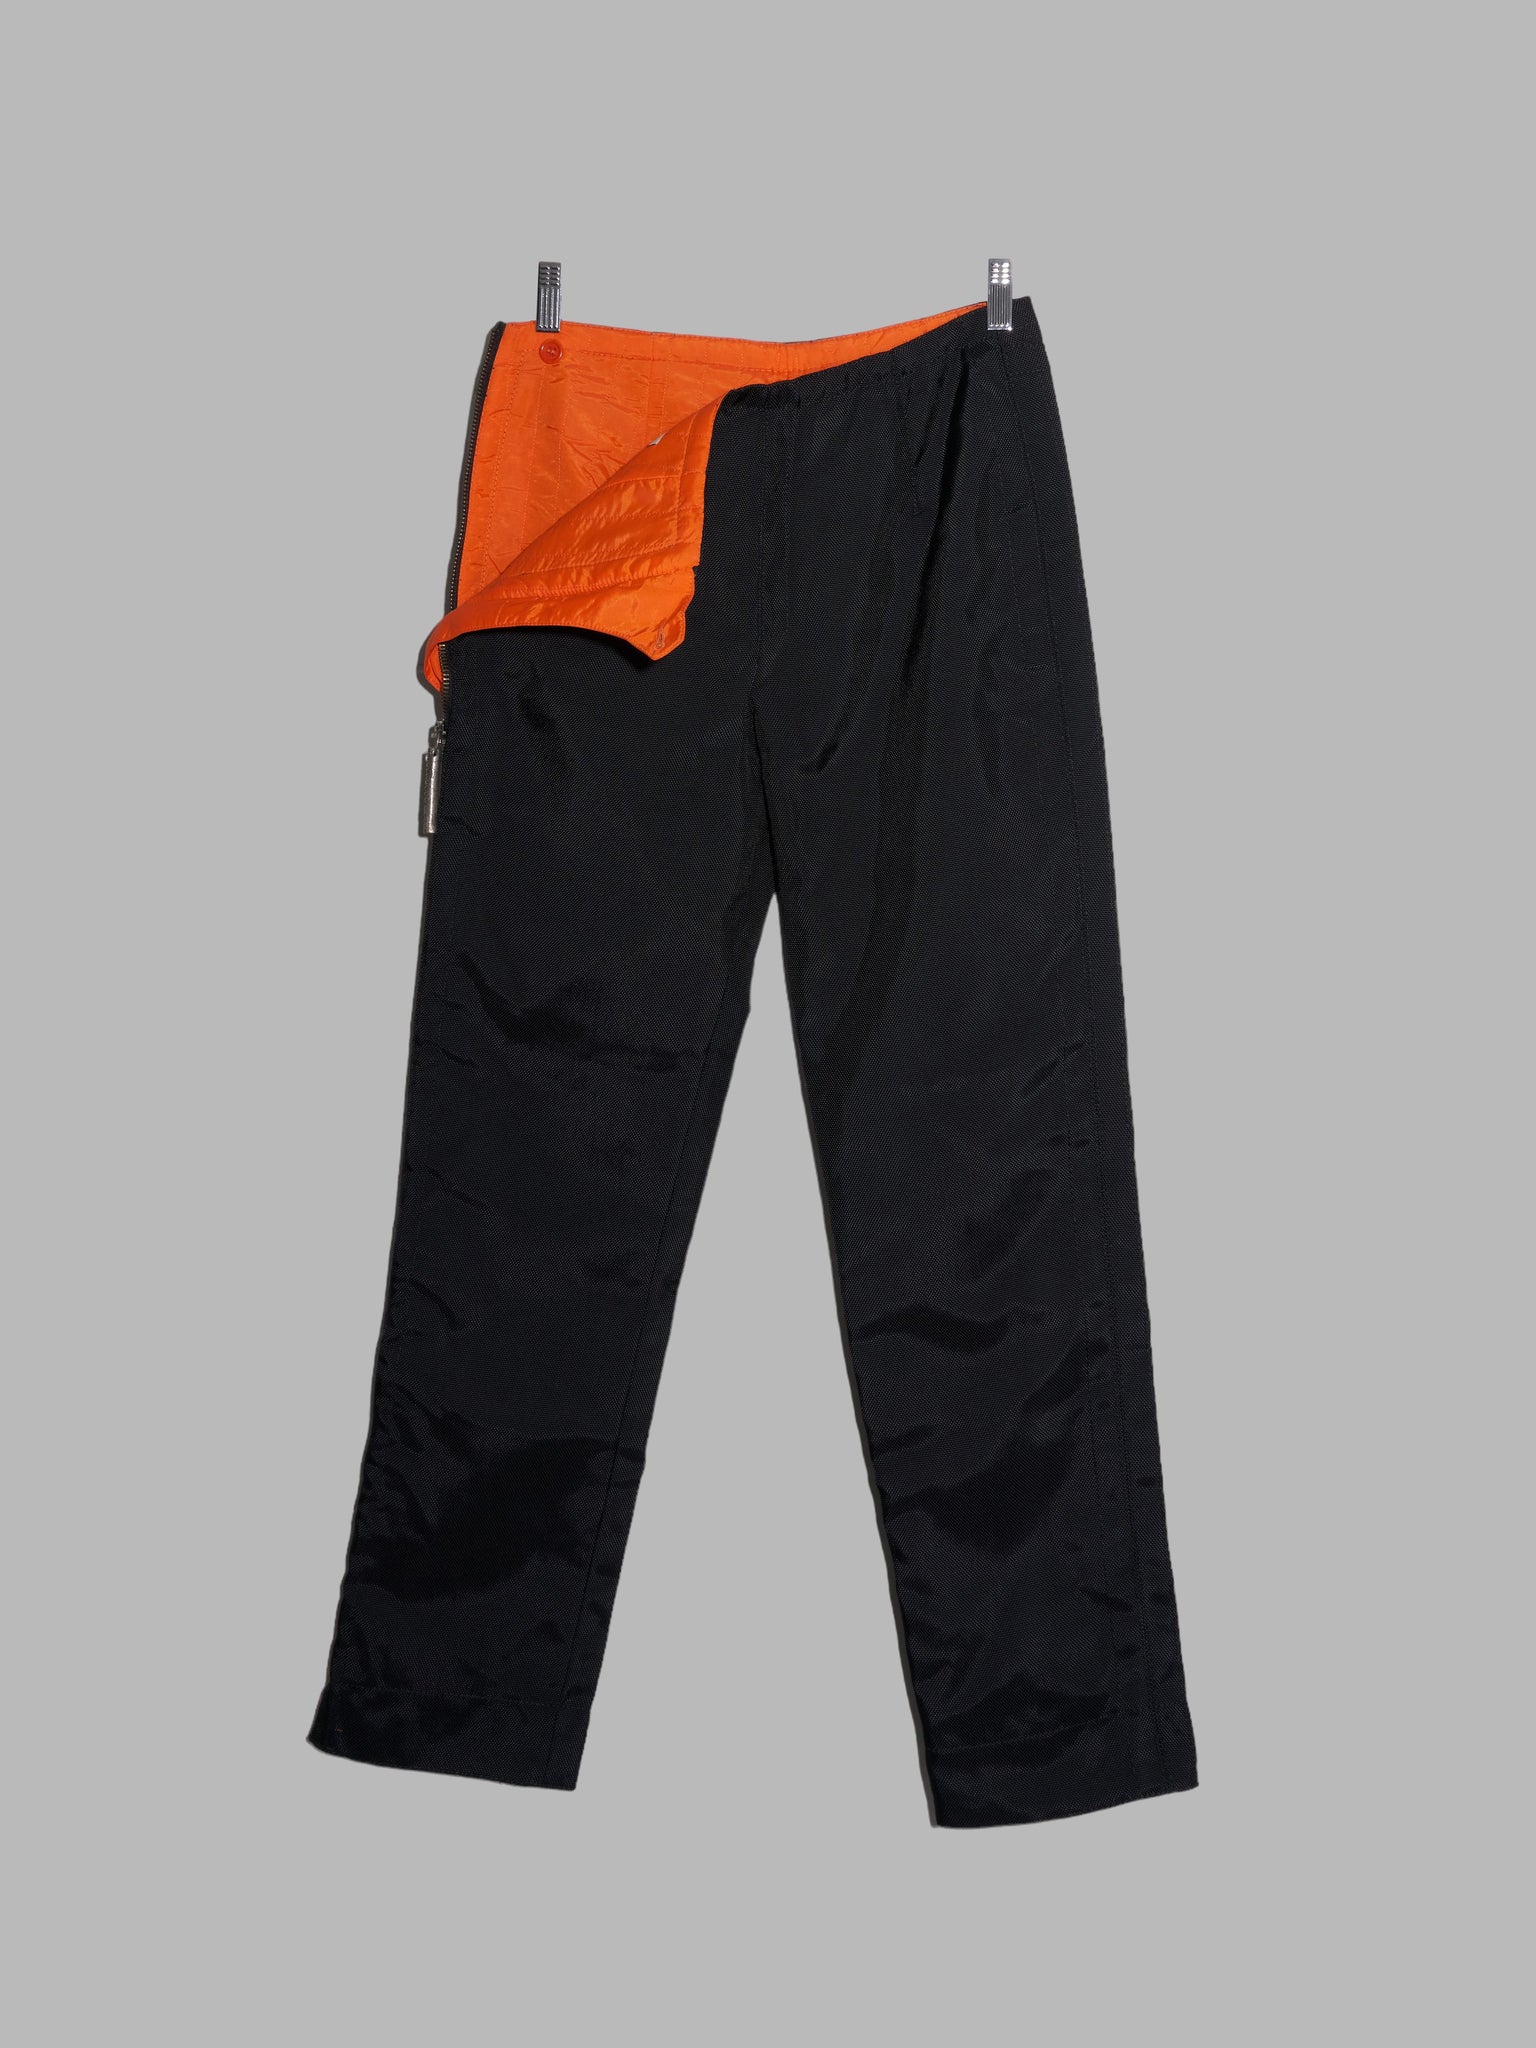 Dirk Bikkembergs Hommes 1990s black ballistic nylon quilted side zip trousers